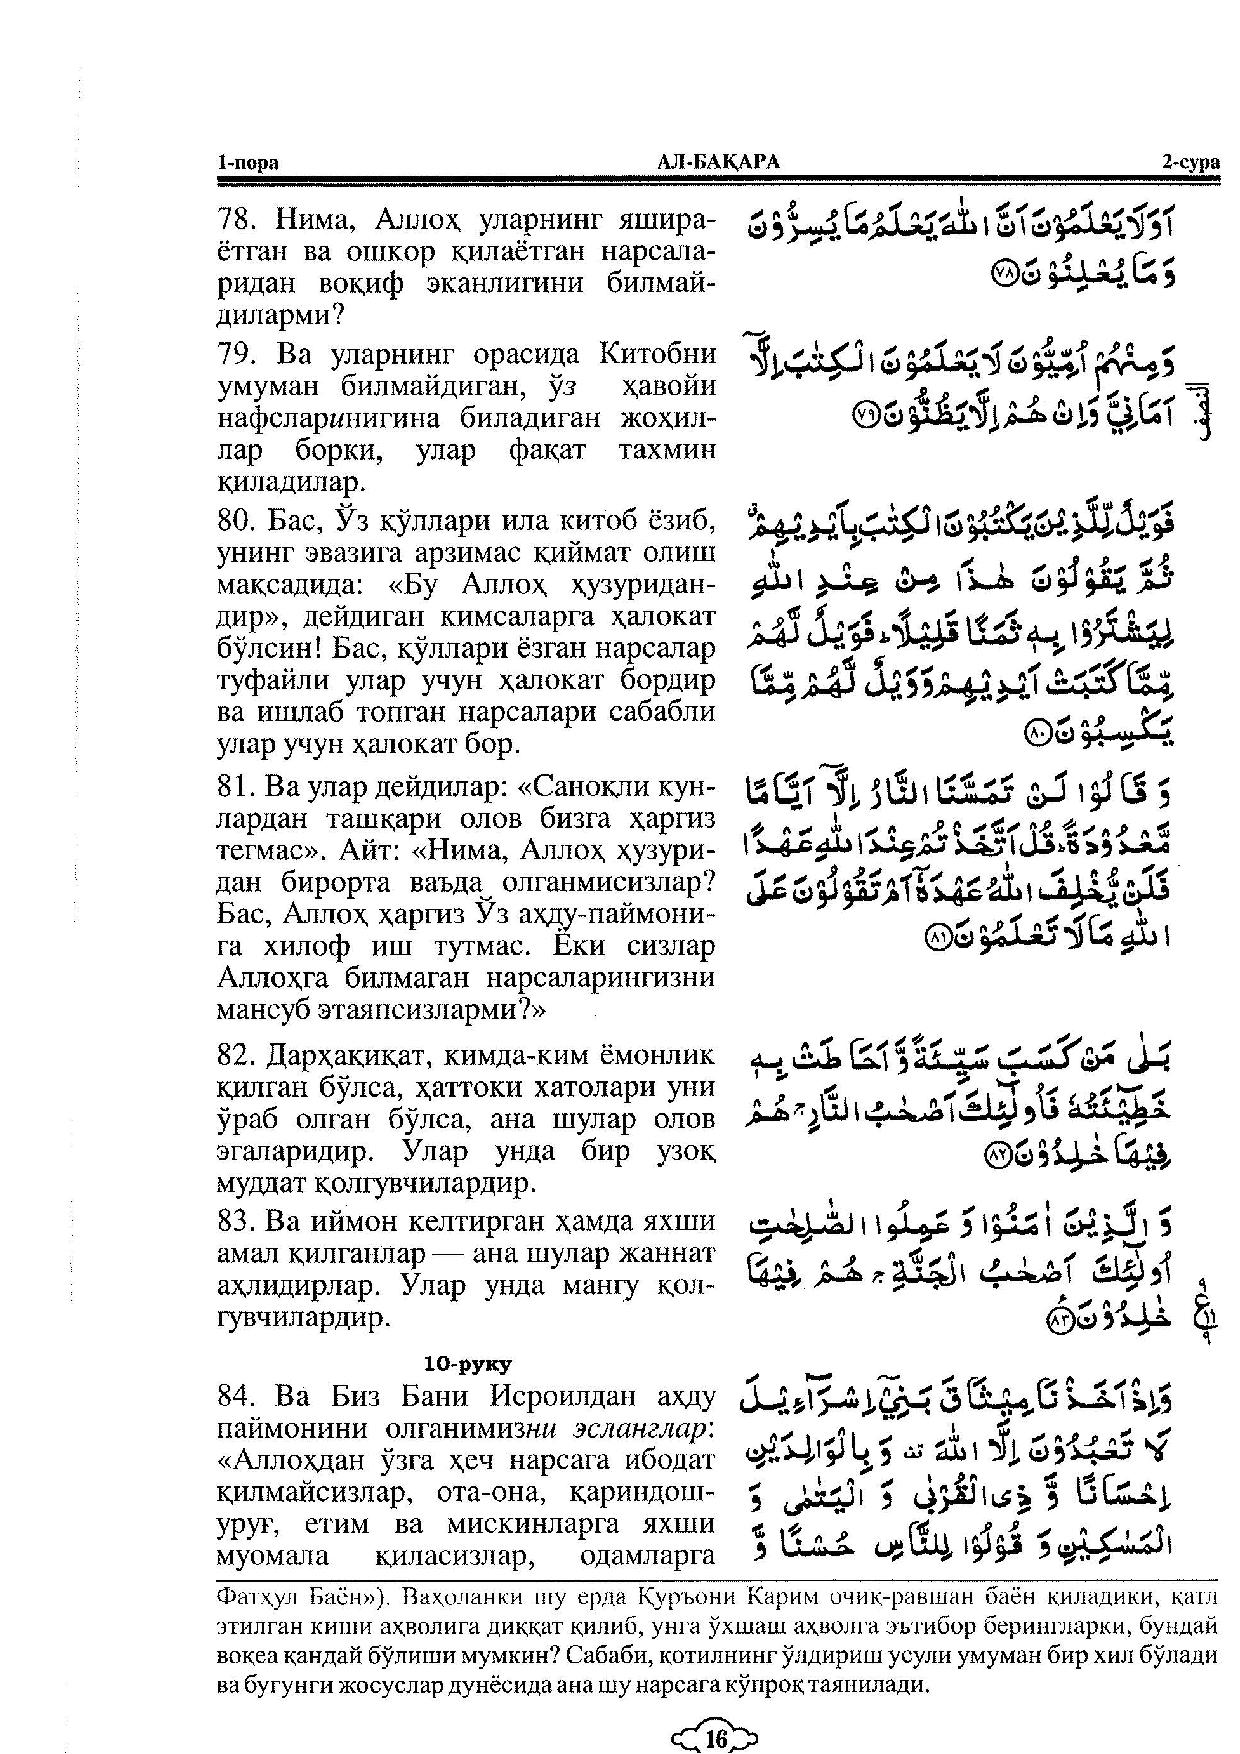 002-al-baqarah-page-014